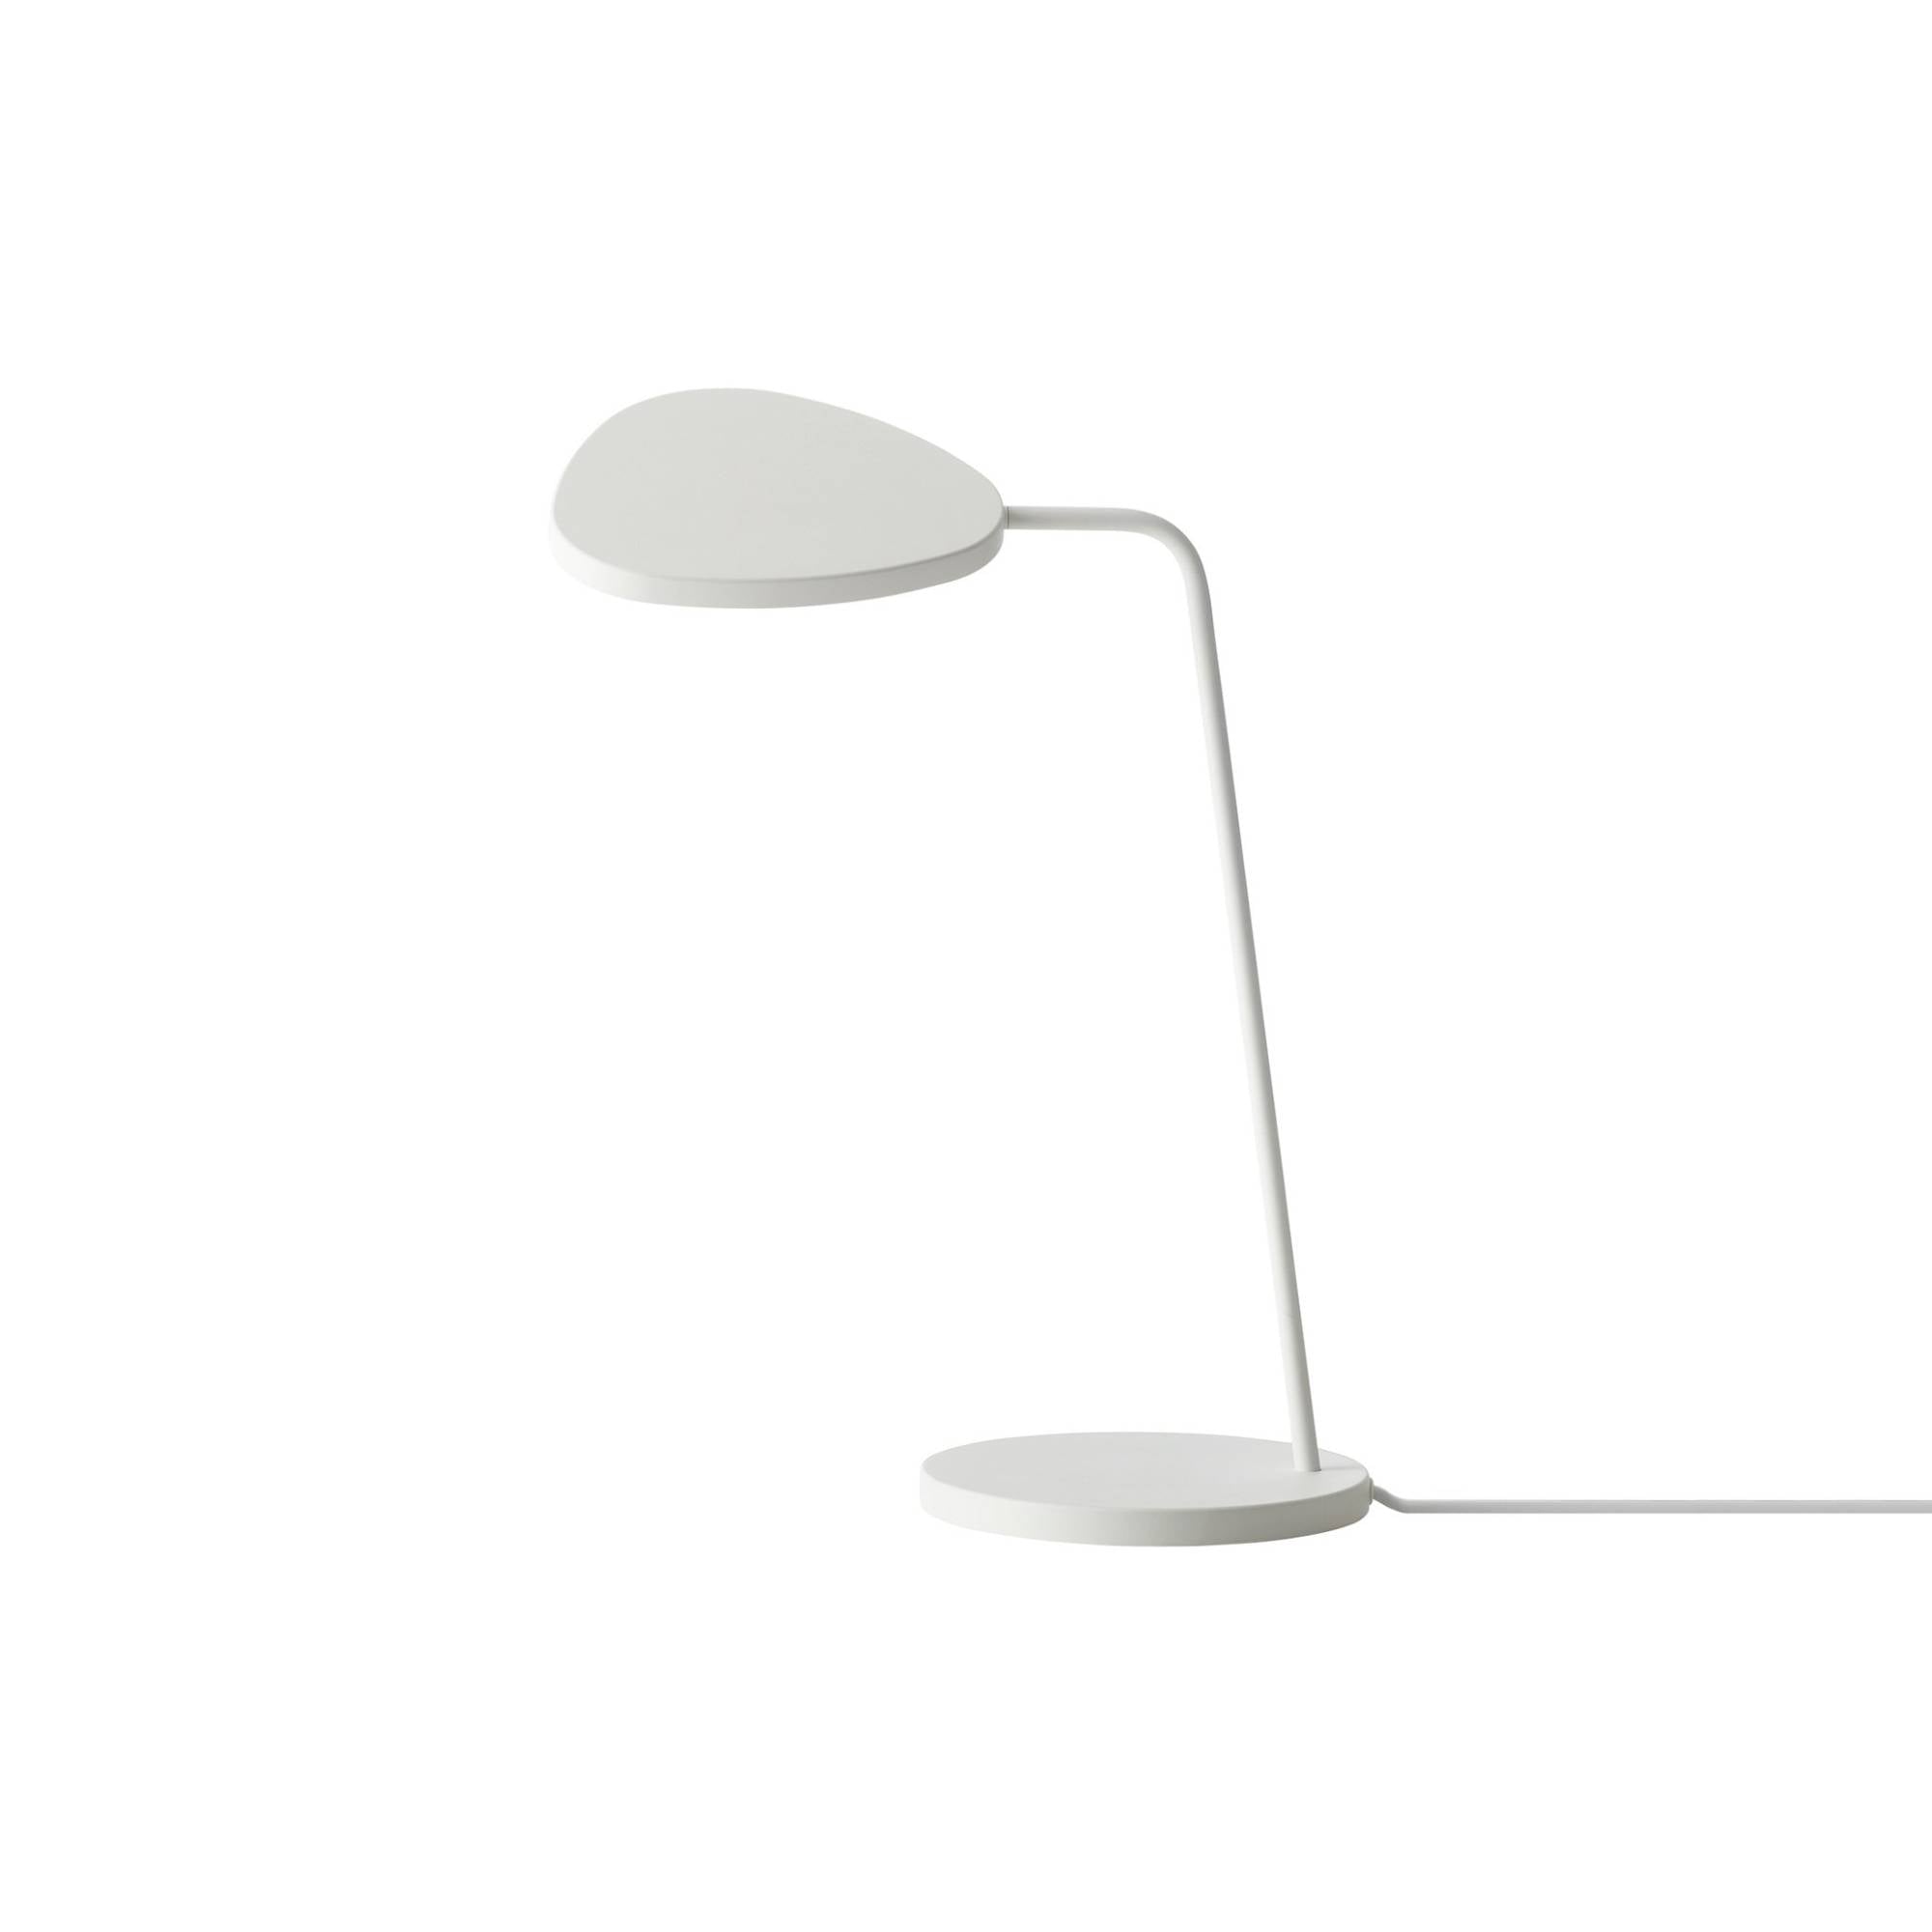 Leaf Table Lamp: White